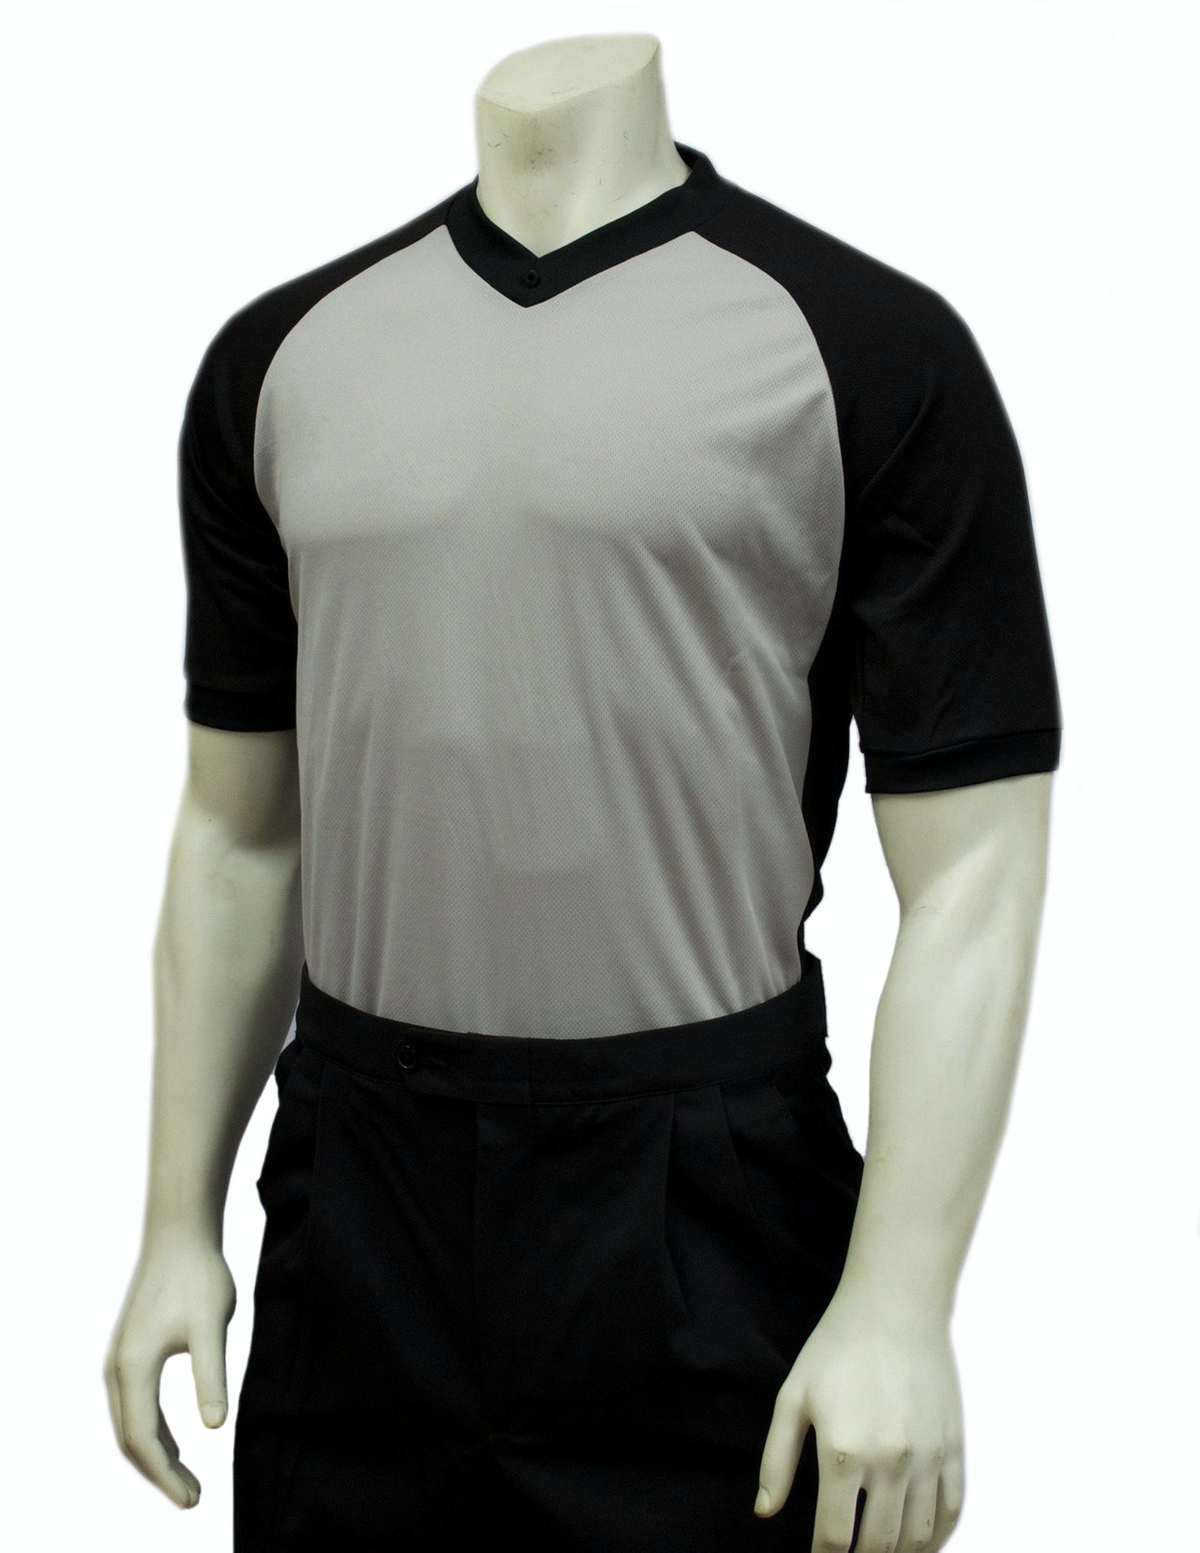 Smitty | USA-207-607 | "BODY FLEX" Referee Shirt | Grey w/ Black Raglan Sleeve and Black Side Panel | Made in USA - Great Call Athletics